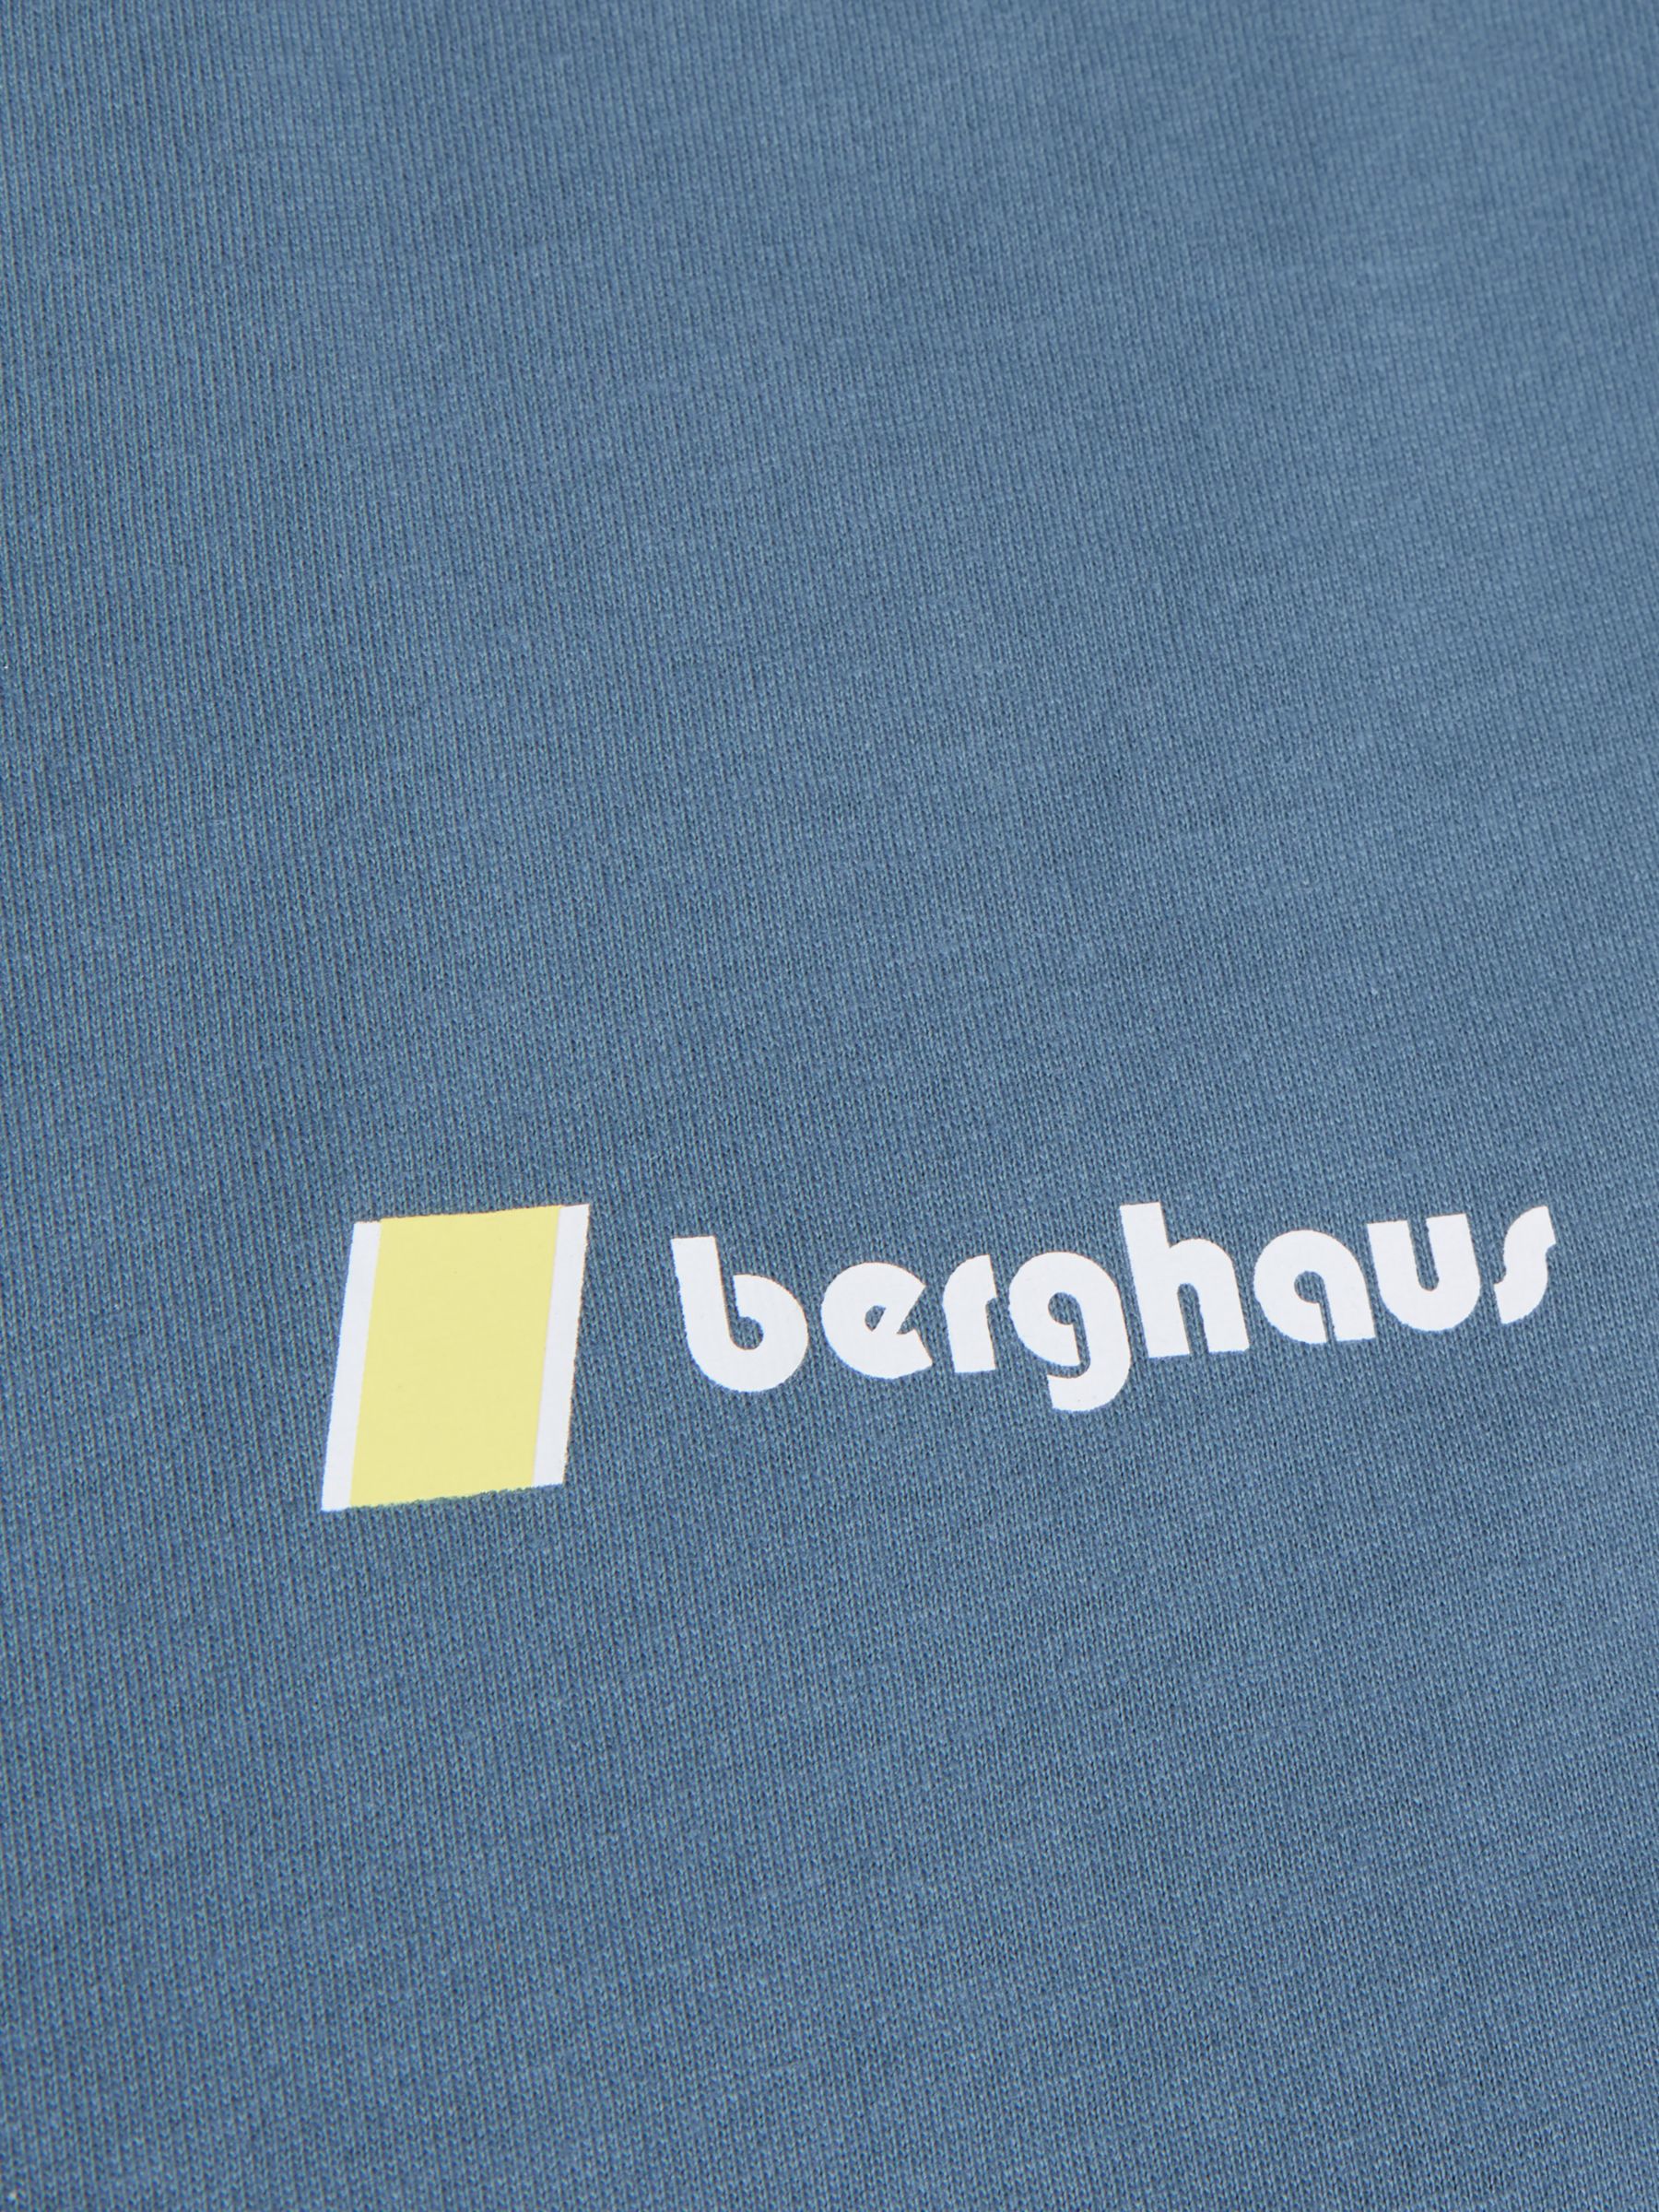 Berghaus Climb Organic Cotton Short Sleeve T-Shirt, Airway Grey, L